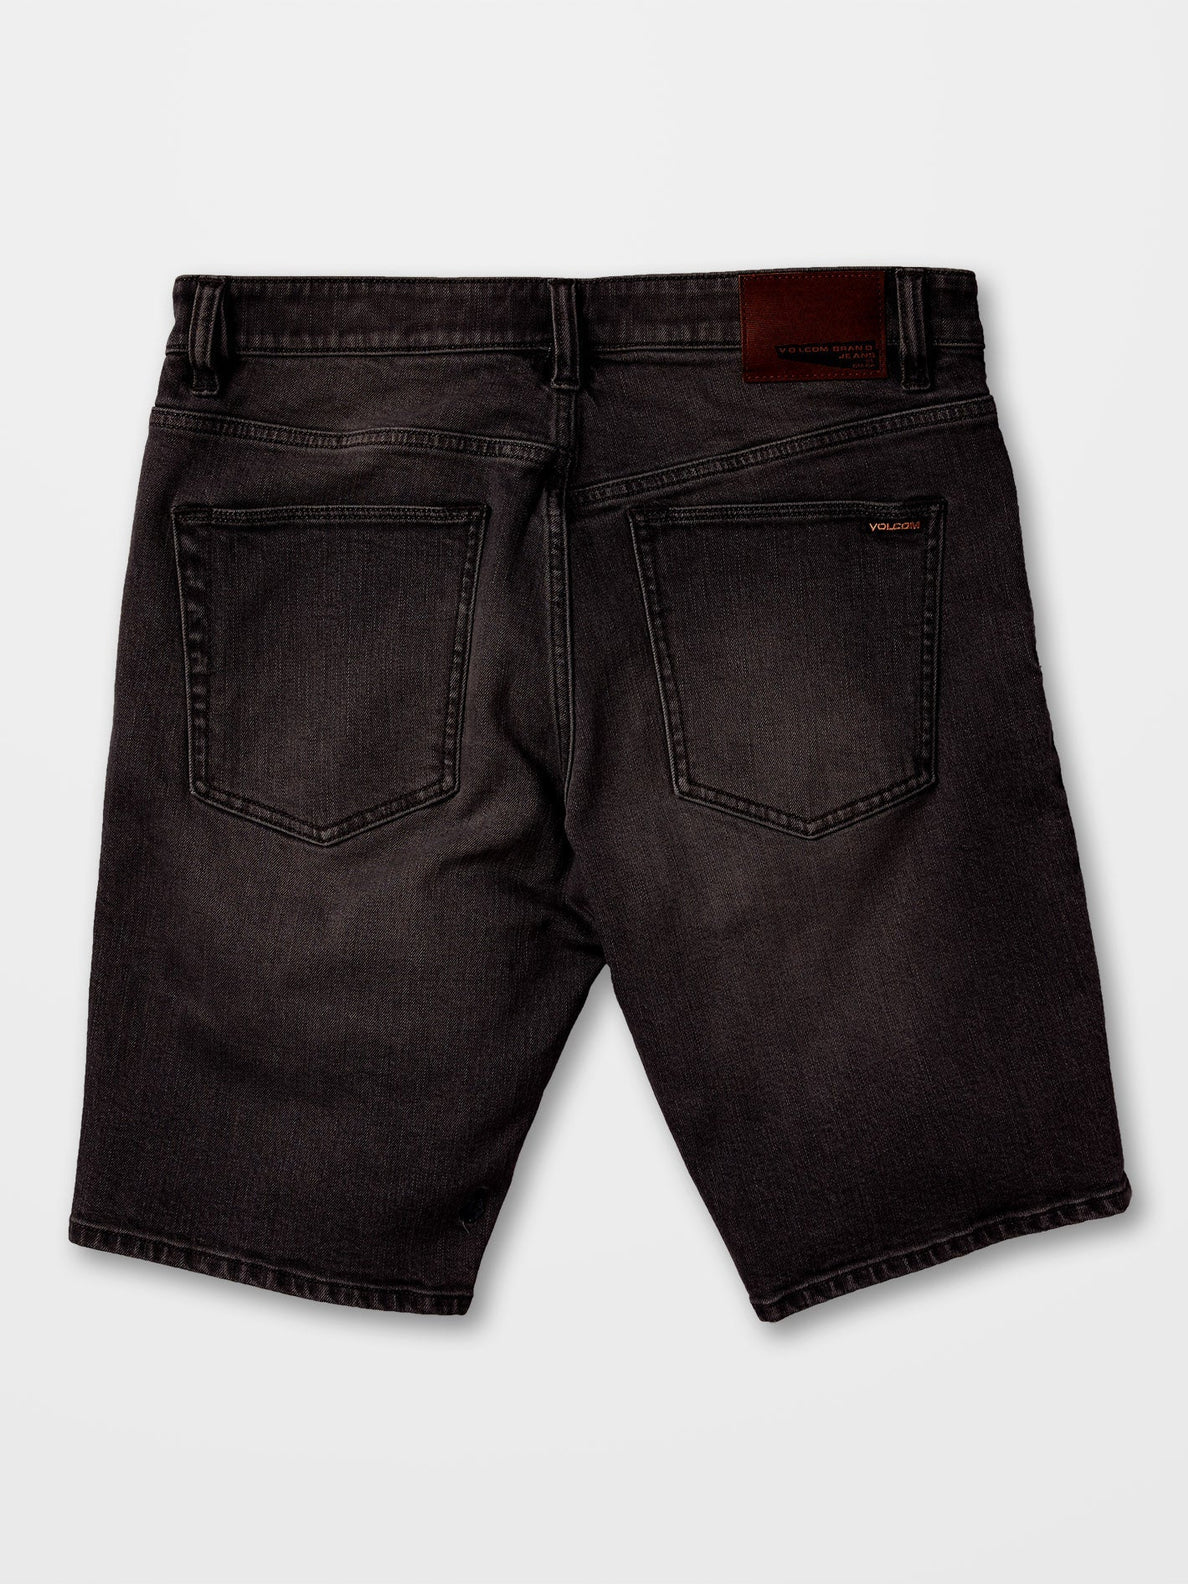 Volcom Solver Denim Shorts – Black Out